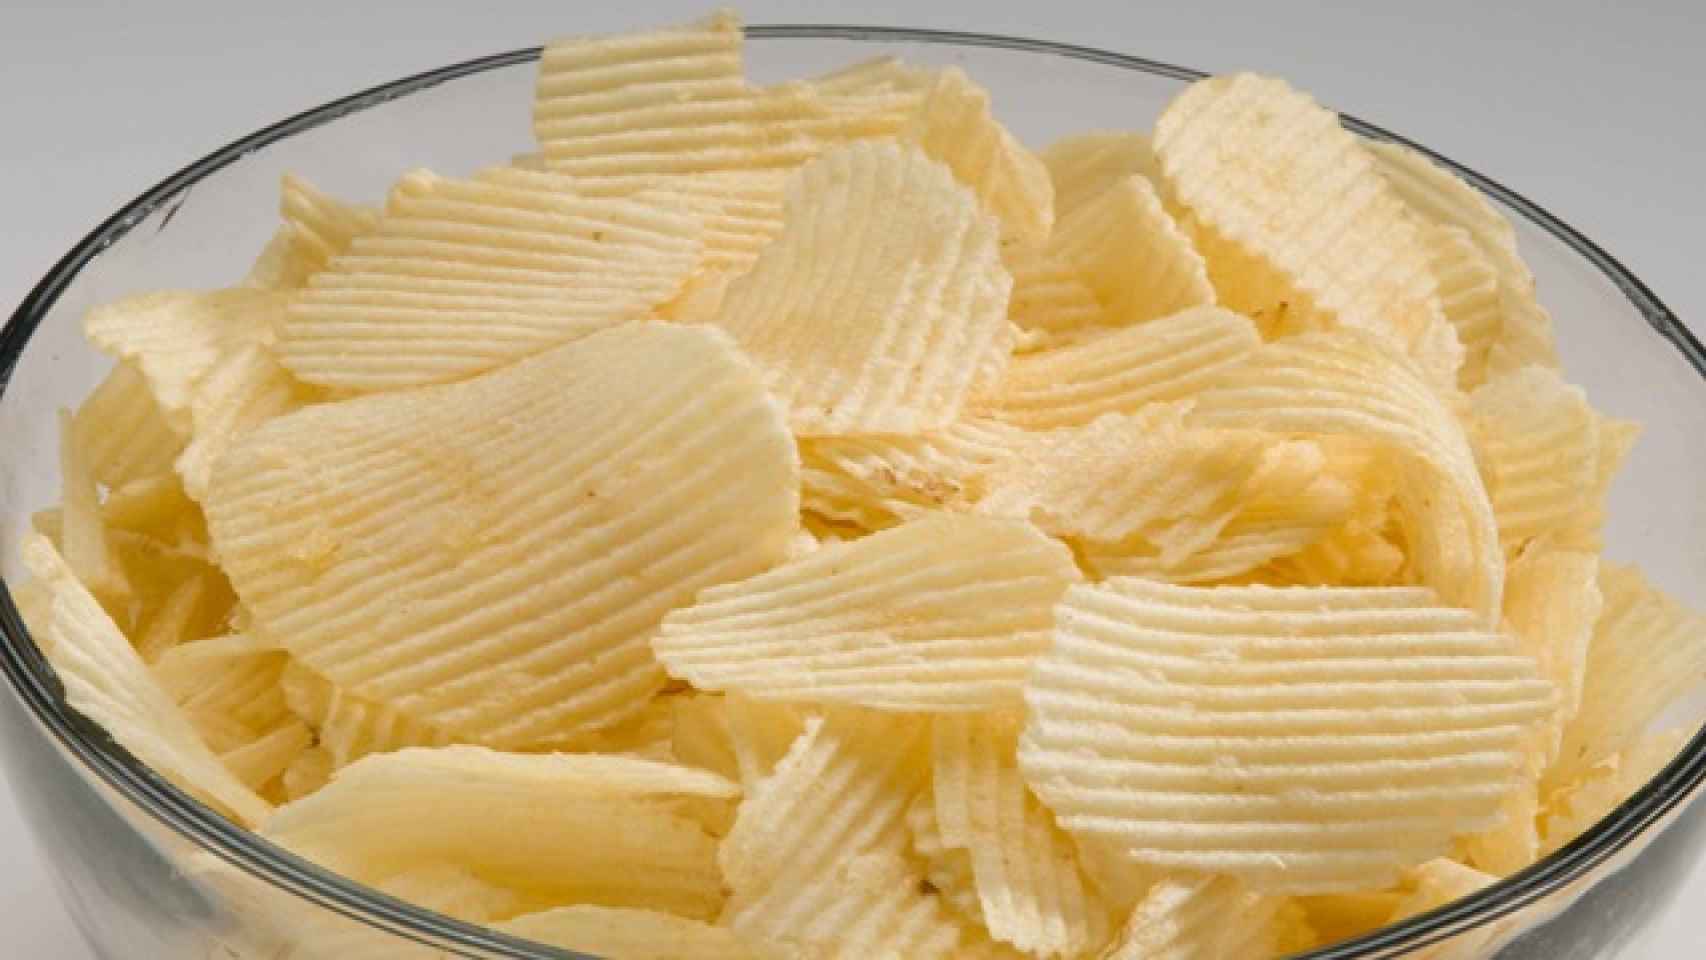 Papatas chips